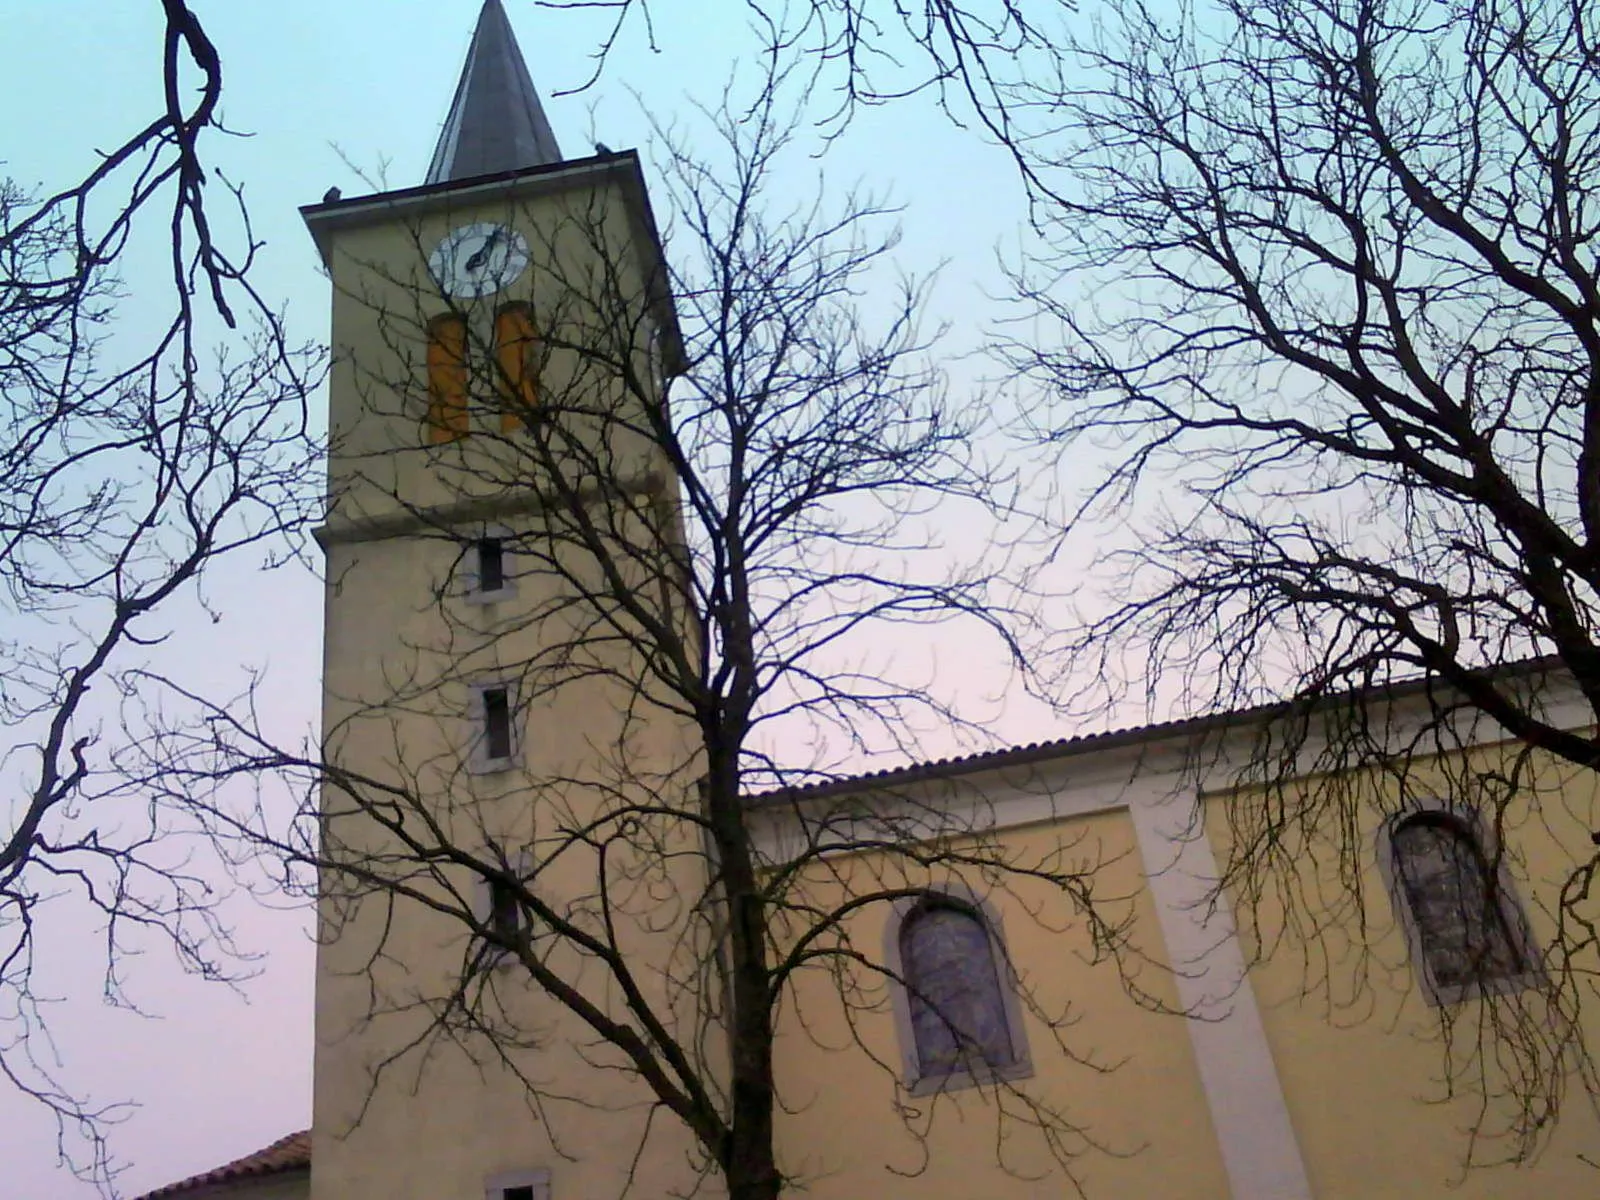 Image of Jadranska Hrvatska